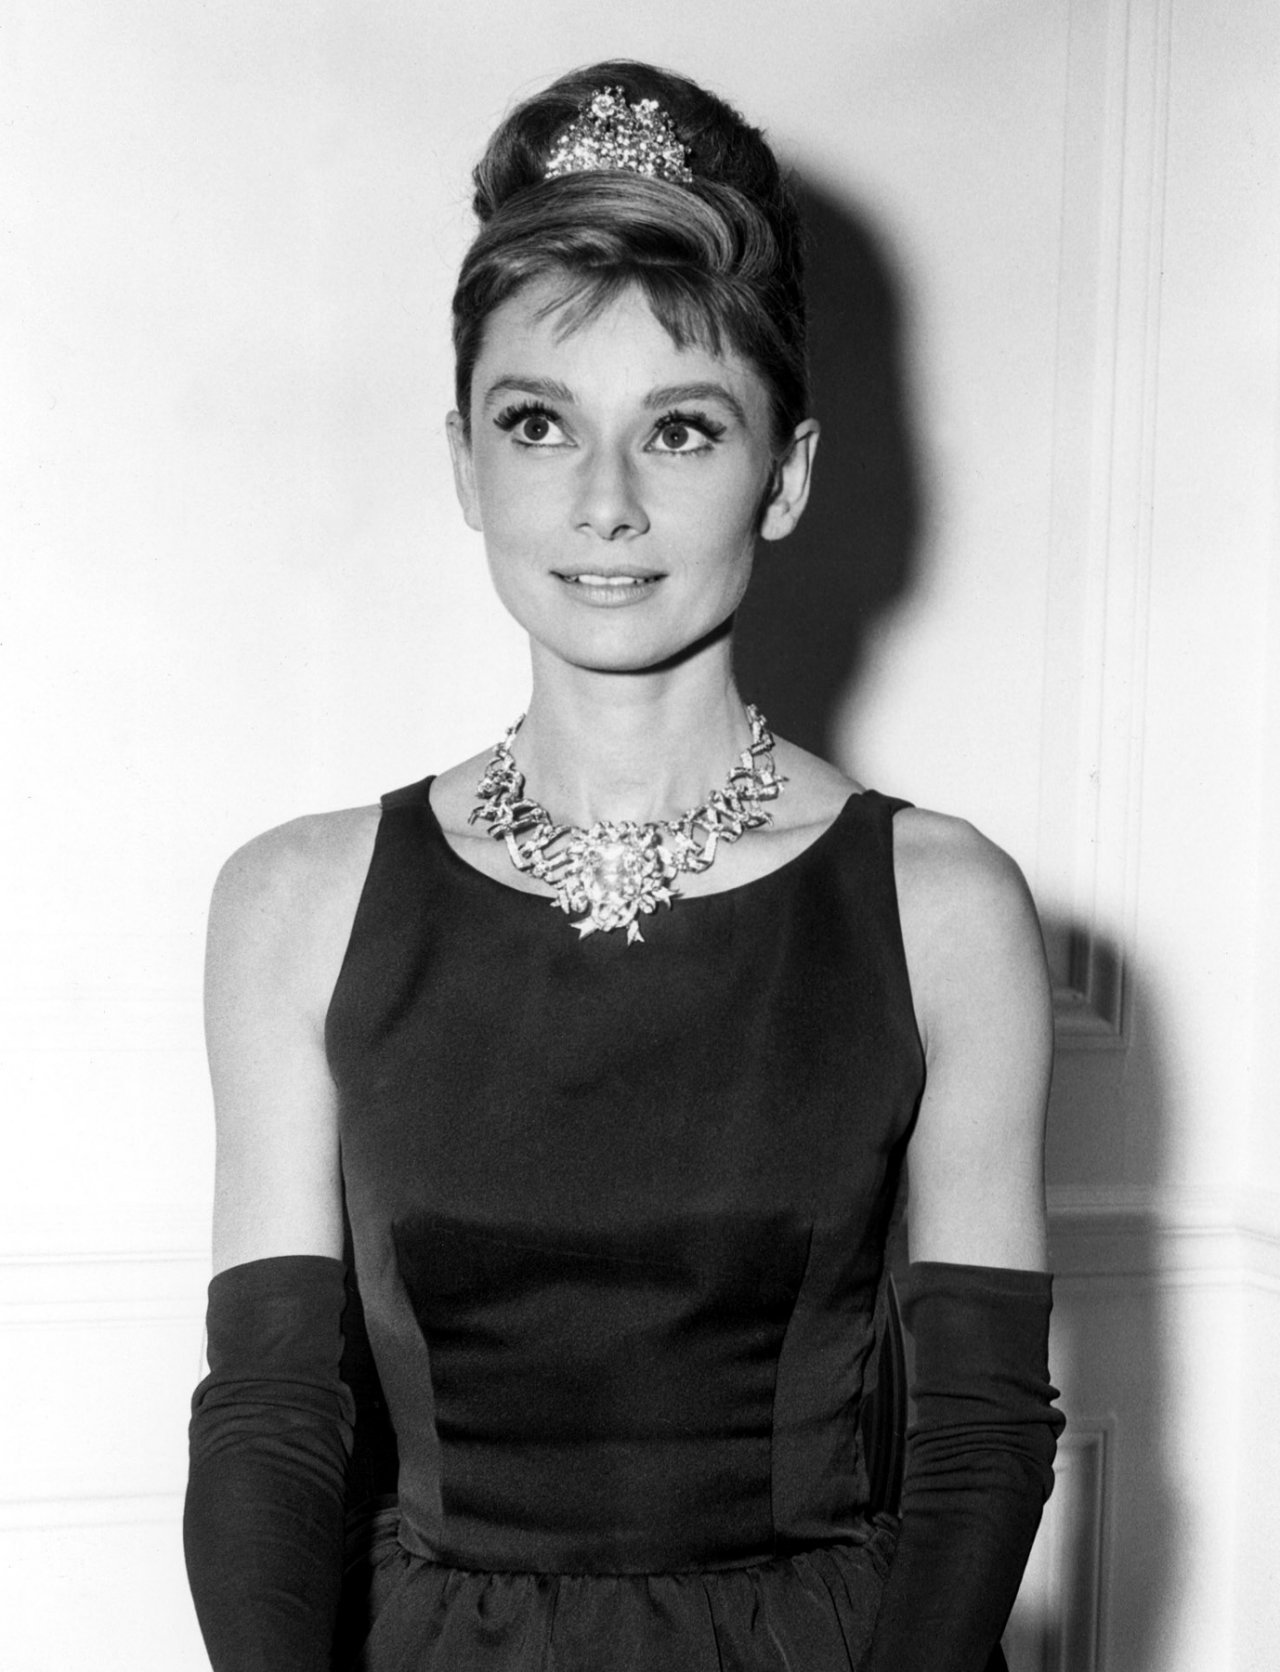 Audrey Hepburn Dress Black & Make You Look Thinner